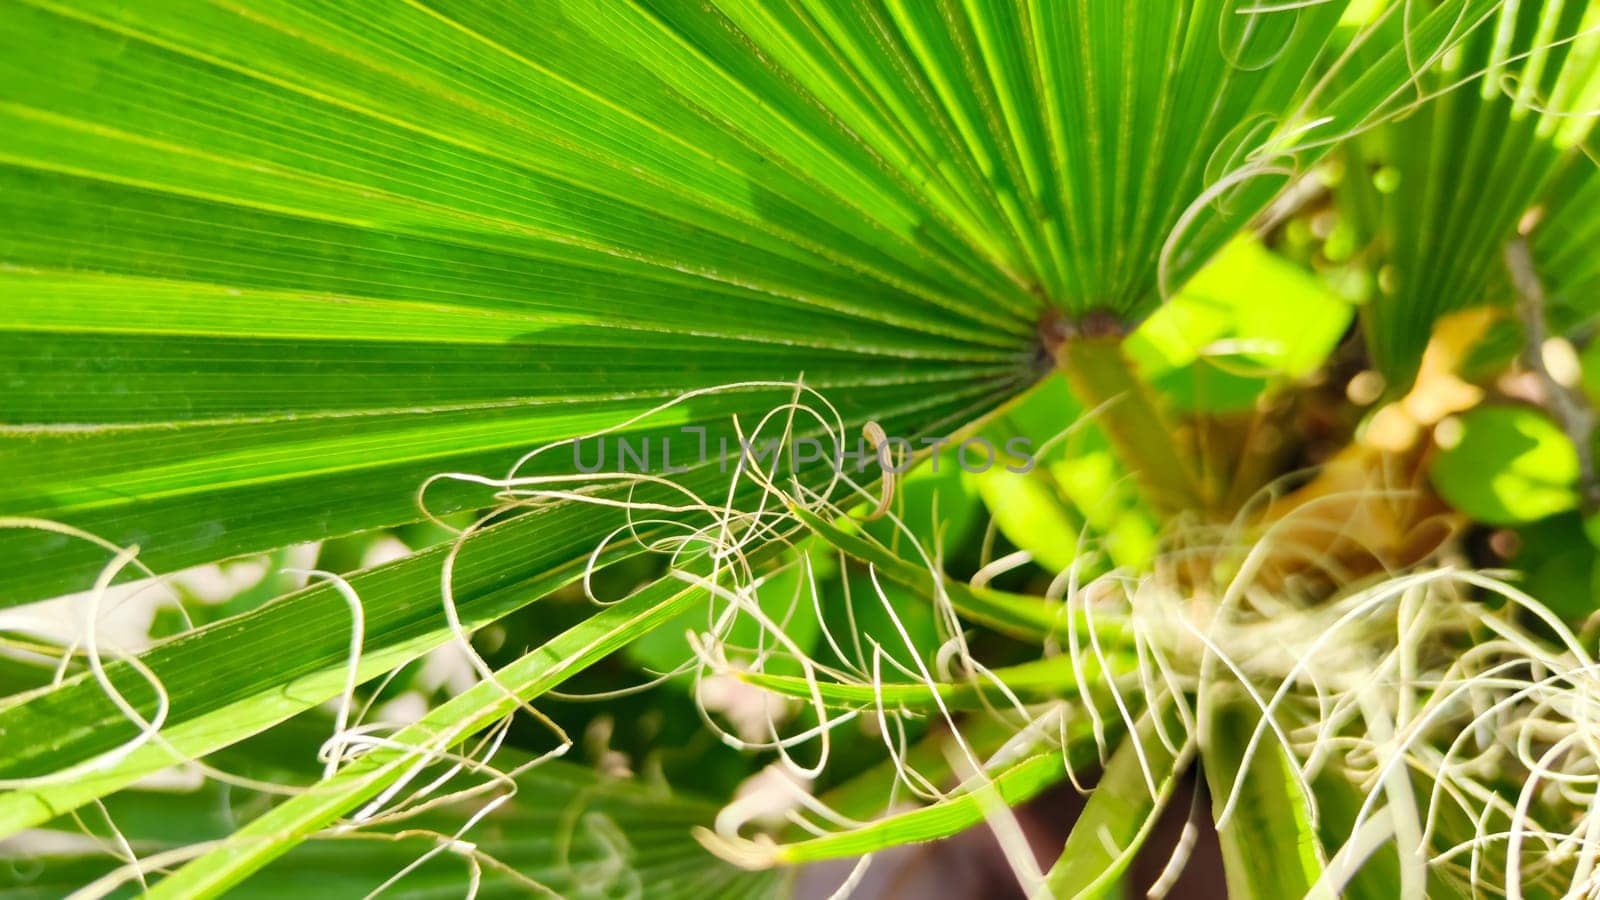 Green tropical palm leaf, close-up